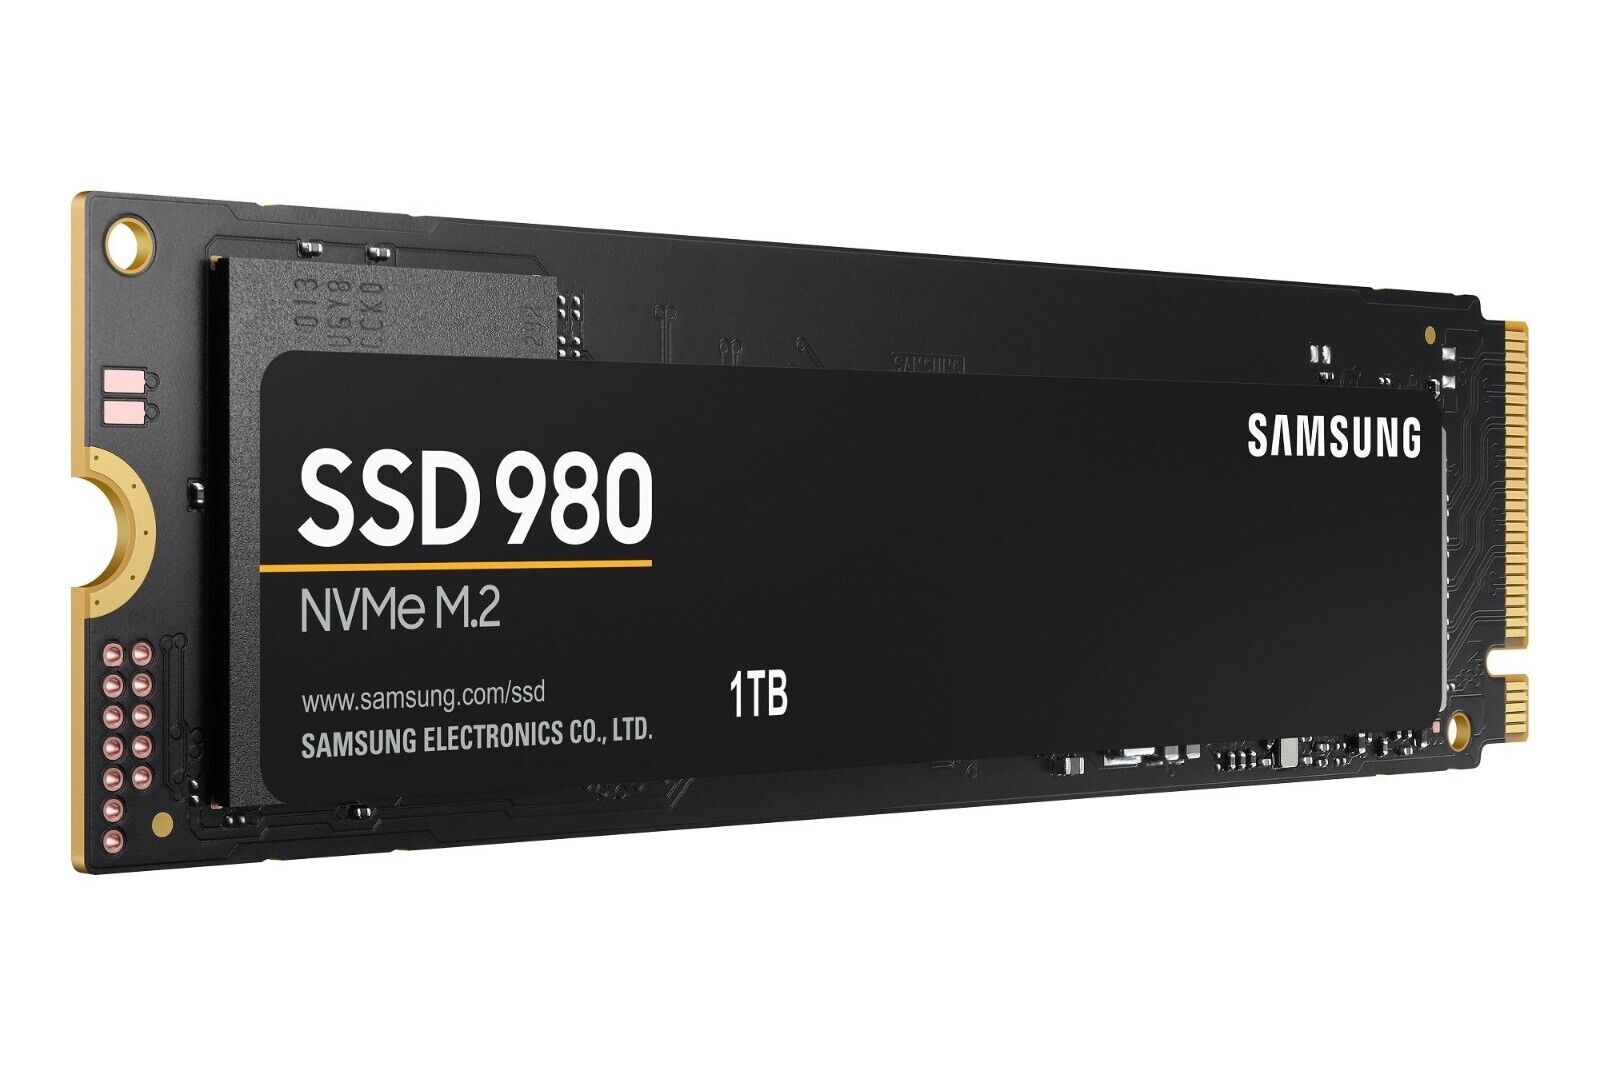 SAMSUNG 1TB 980 NVME SSD M.2 SSD | MZ-V8V1T0 | BLACK - NEW IN BOX